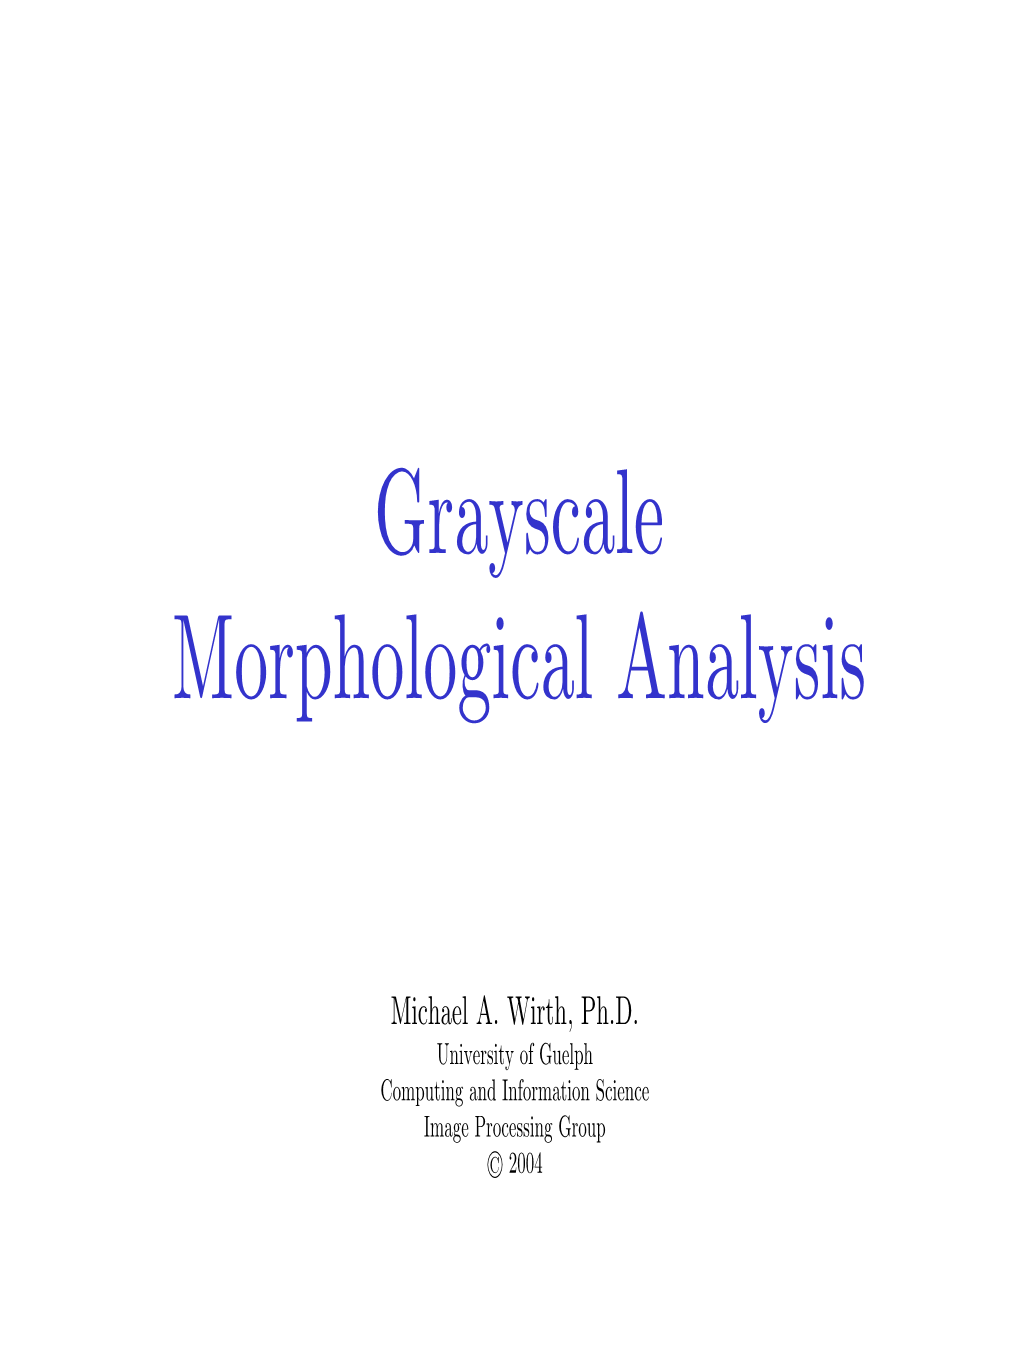 Grayscale Morphological Analysis